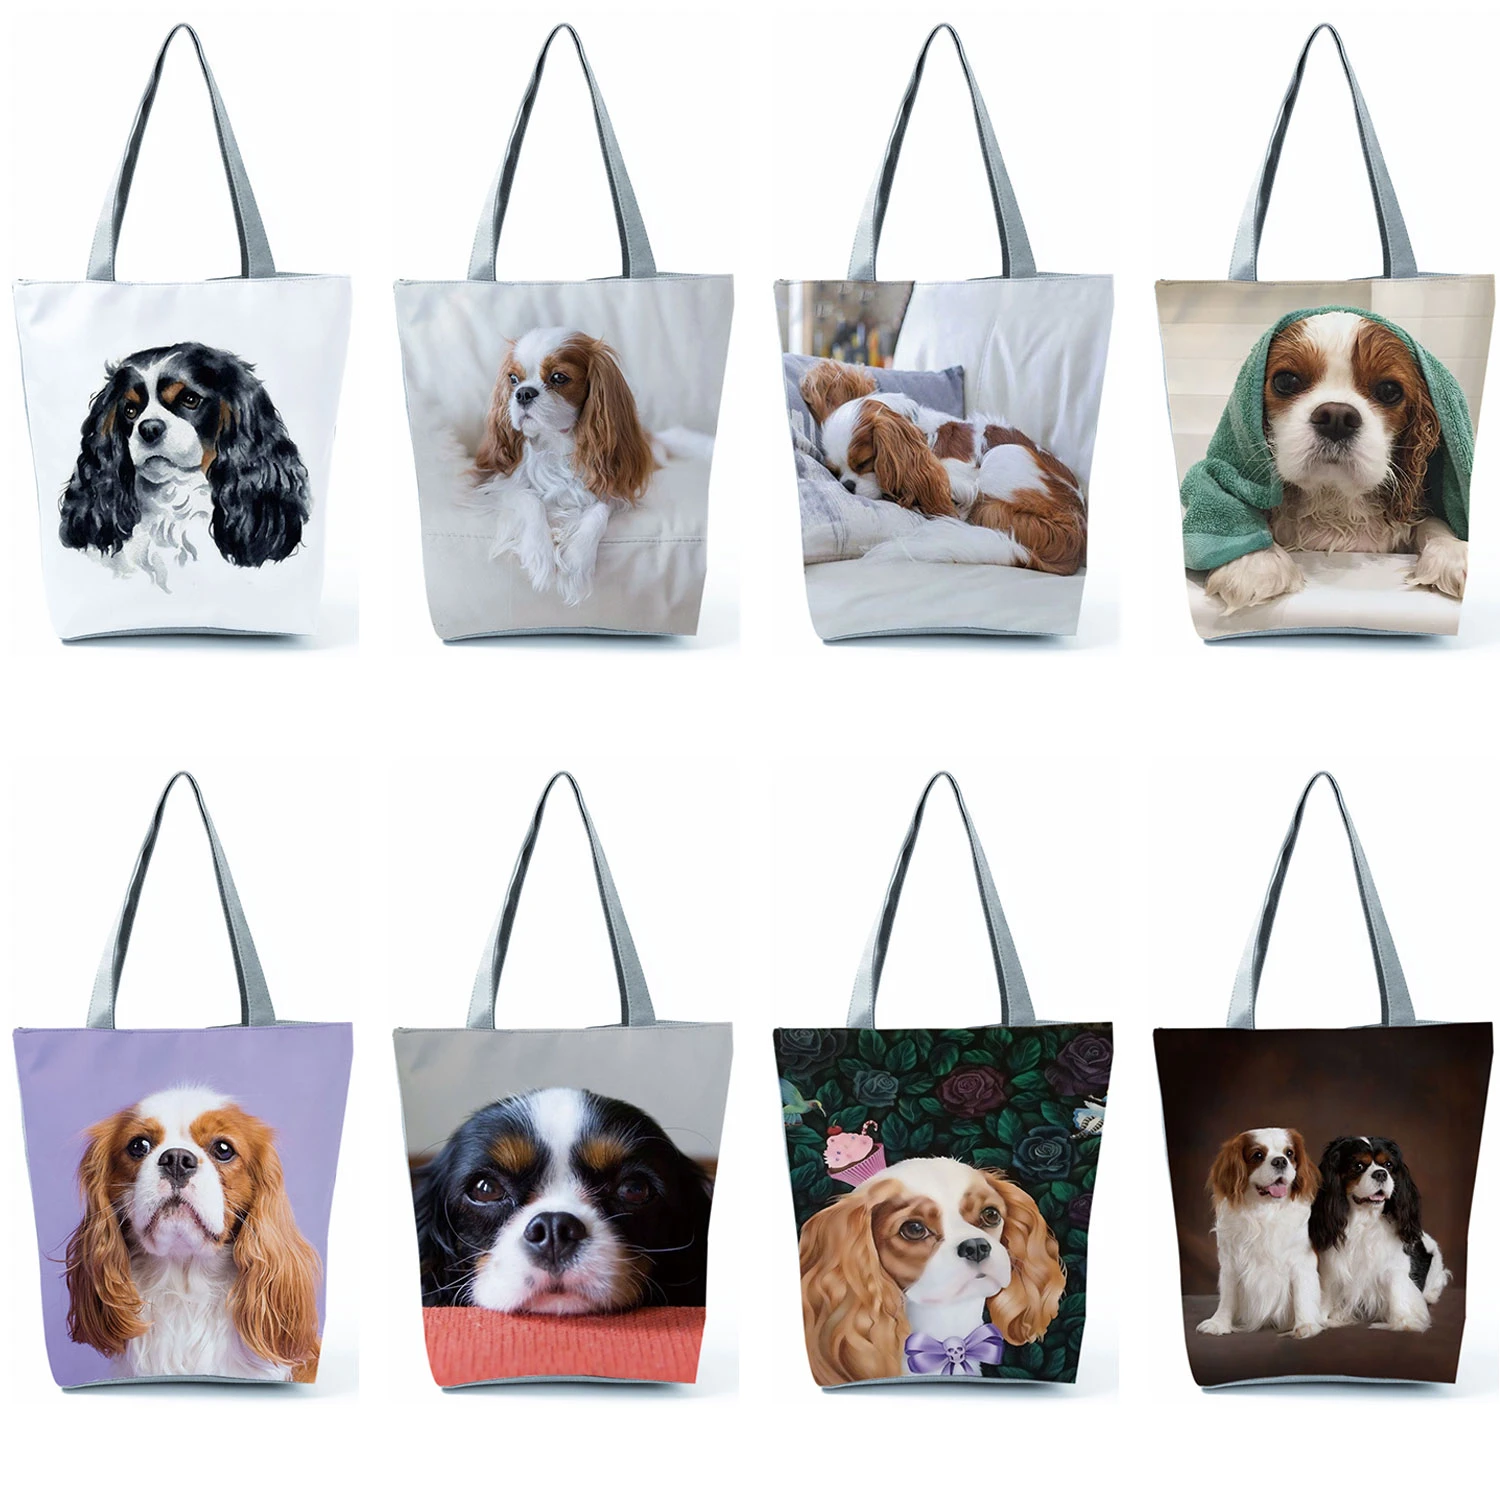 Charles Spaniel Dog Printed Women Handbags Fashion Tote Shoulder Bags Large Capacity Shopping Bag Bolsa Female Custom Pattern